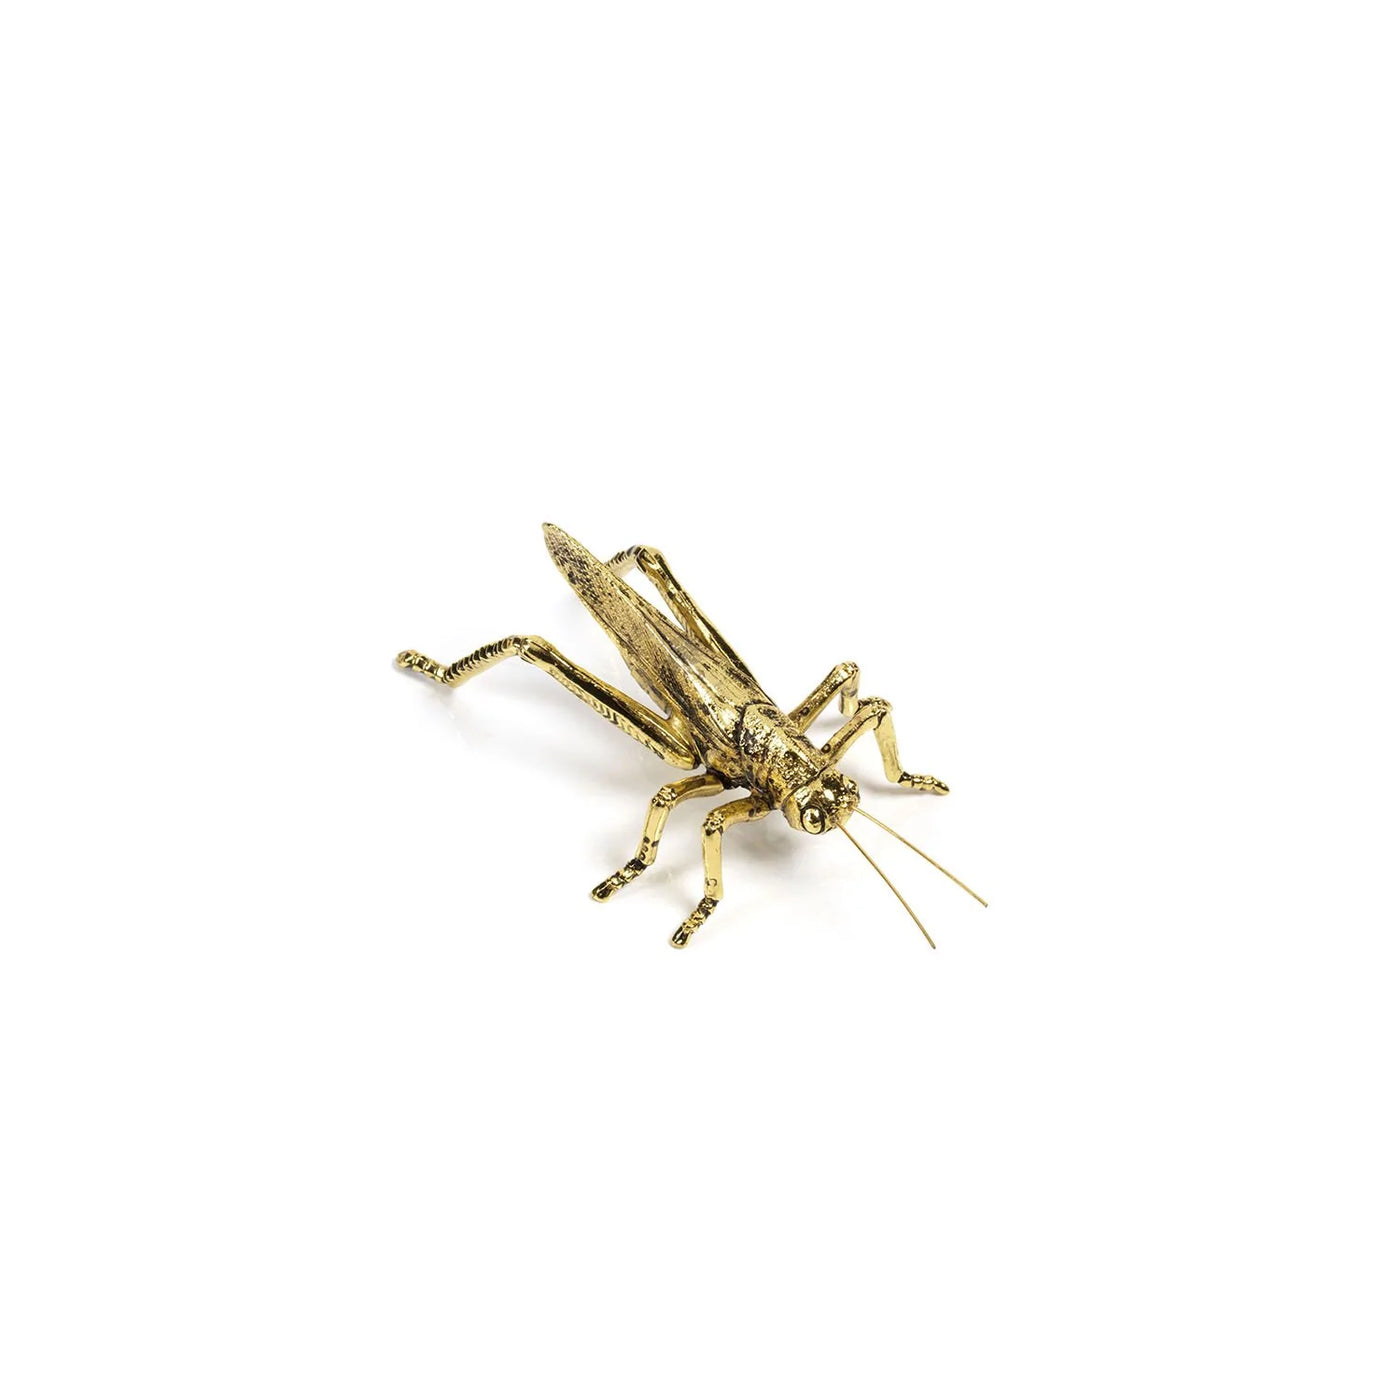 Decorative Gold Insect - Grasshopper